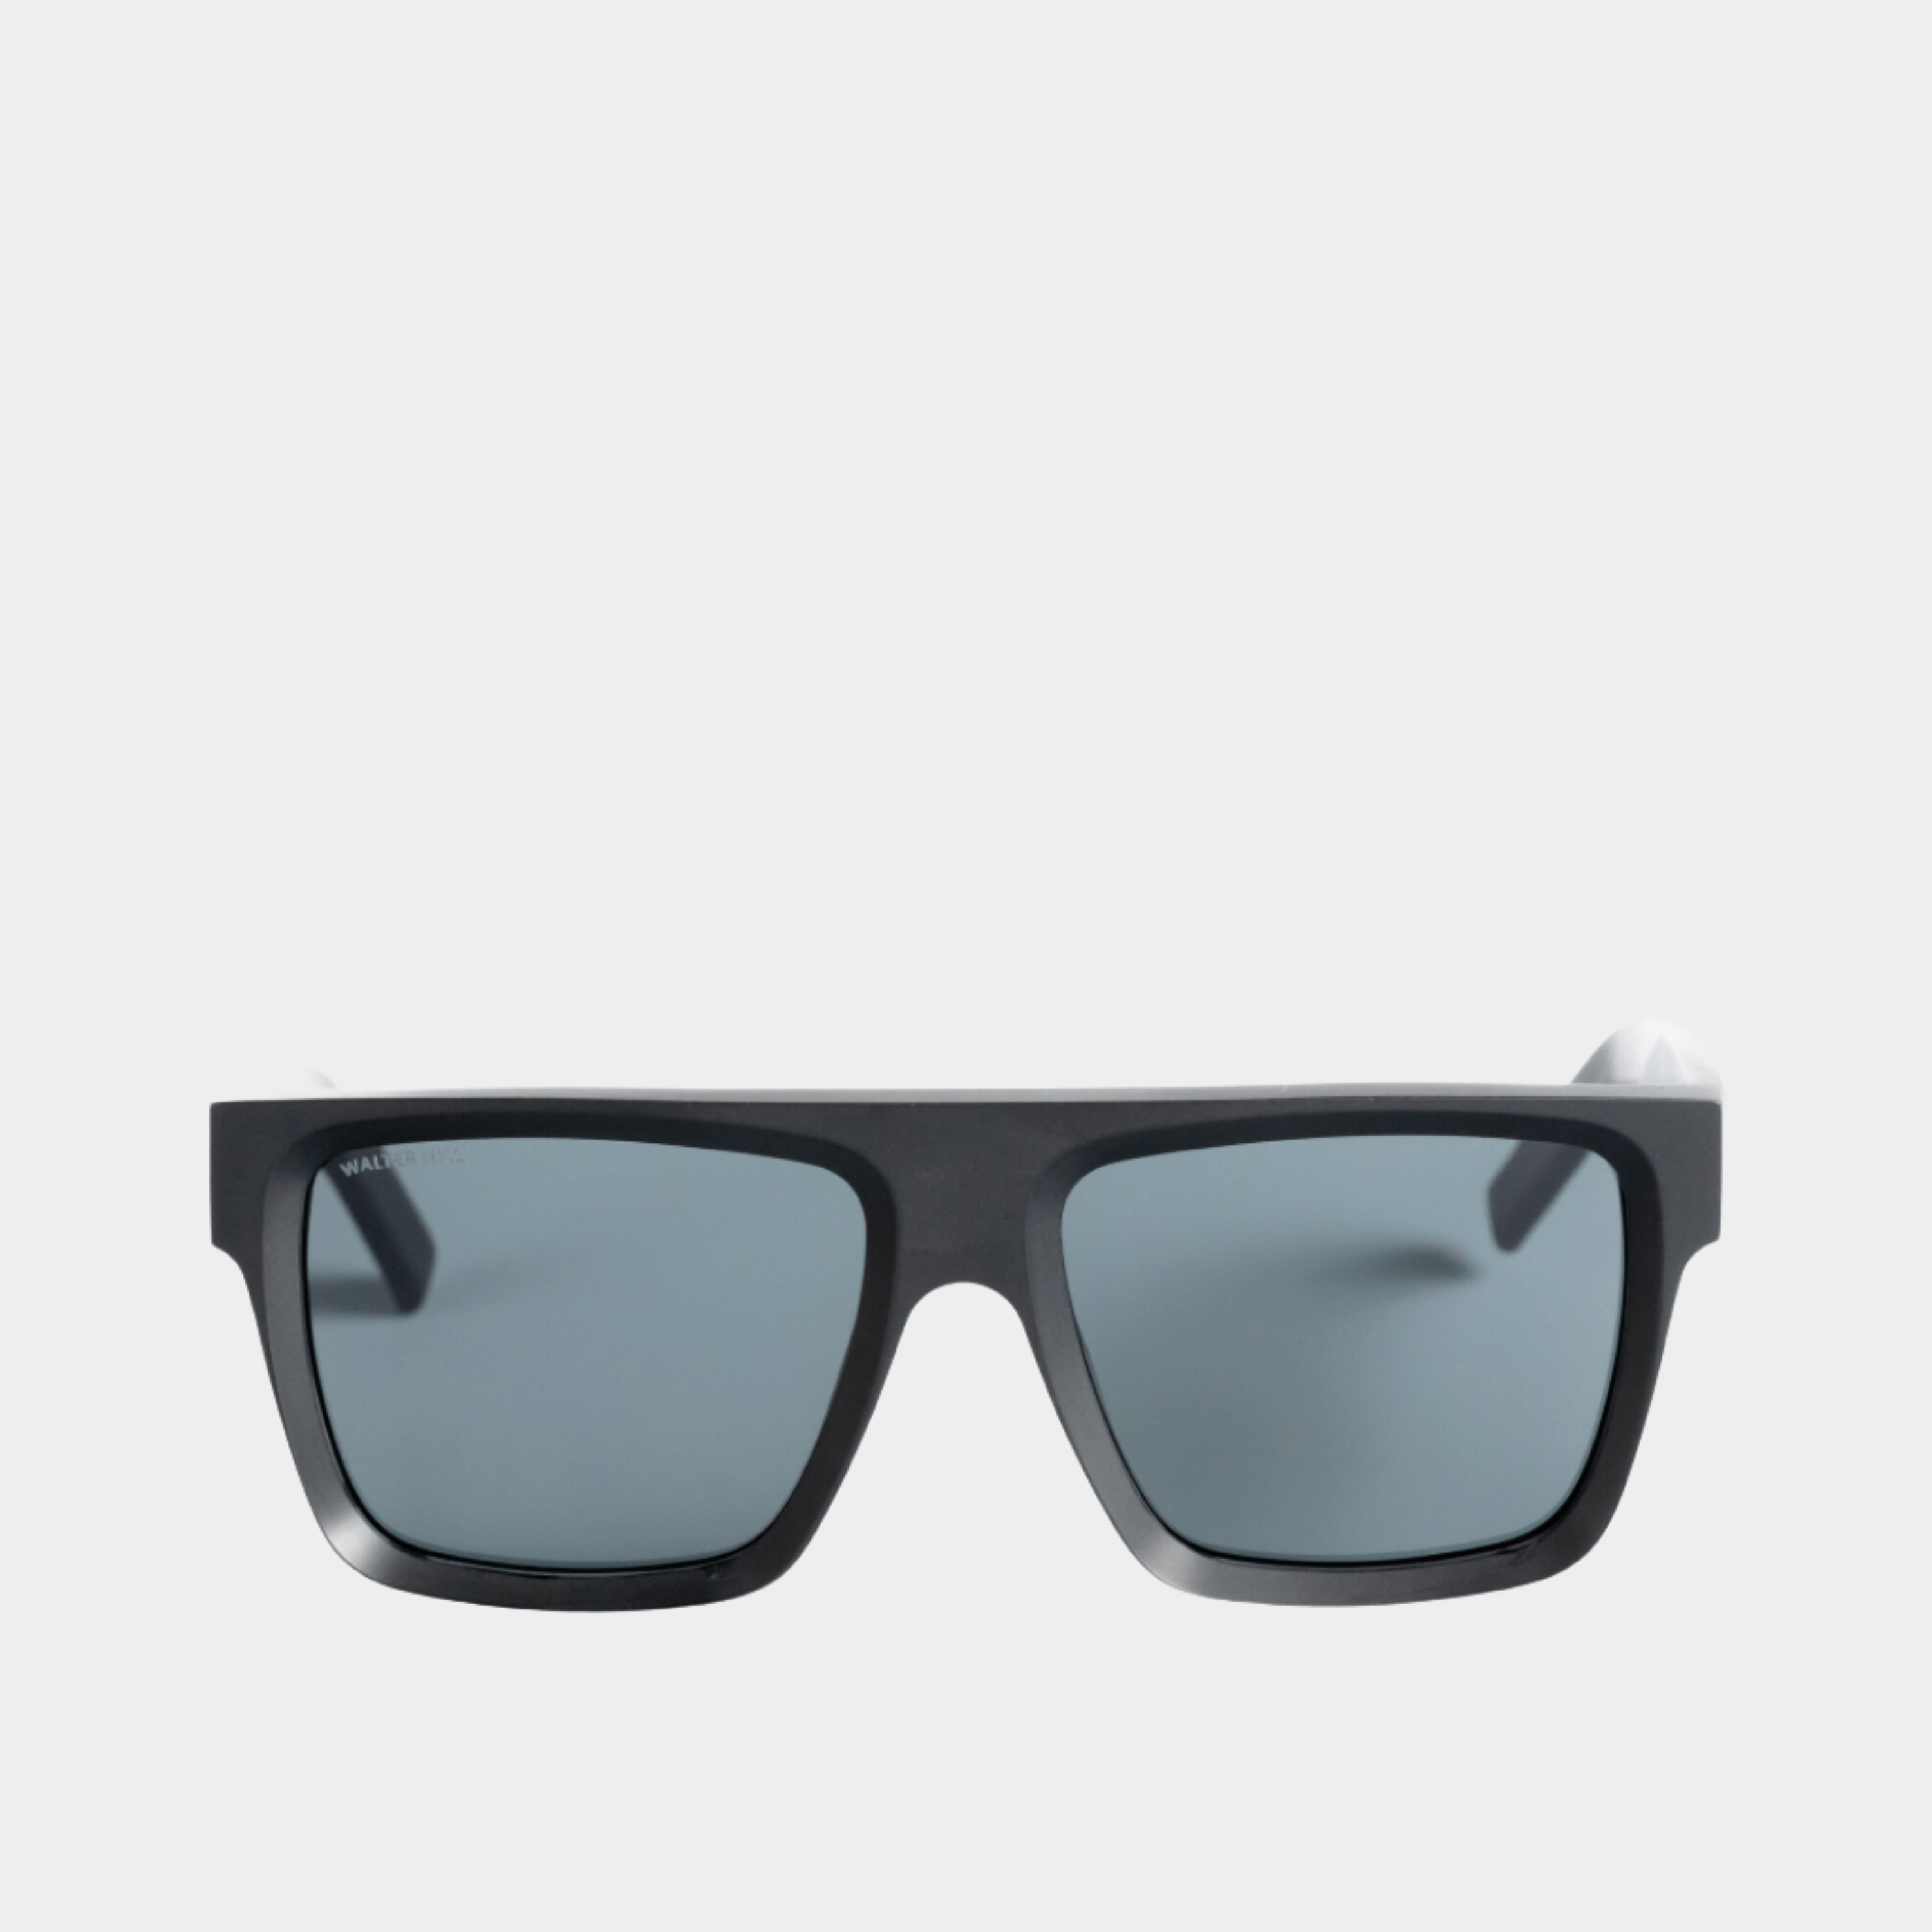 Walter Hill Sunglasses Oversized BANKS - Matte Black